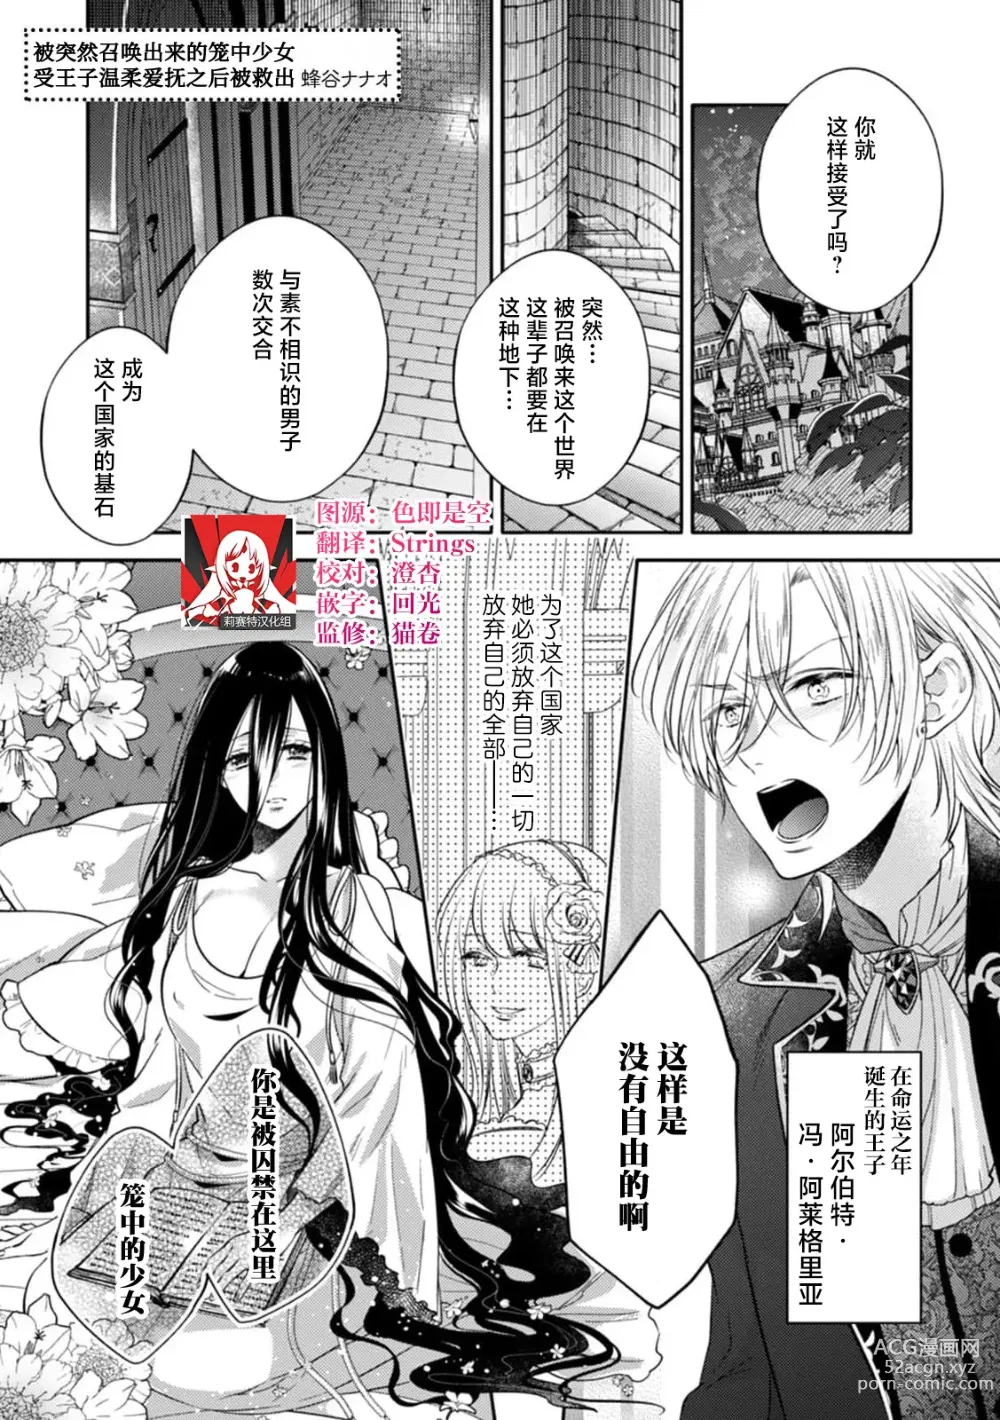 Page 1 of manga 被突然召唤出来的笼中少女受王子温柔爱抚之后被救出